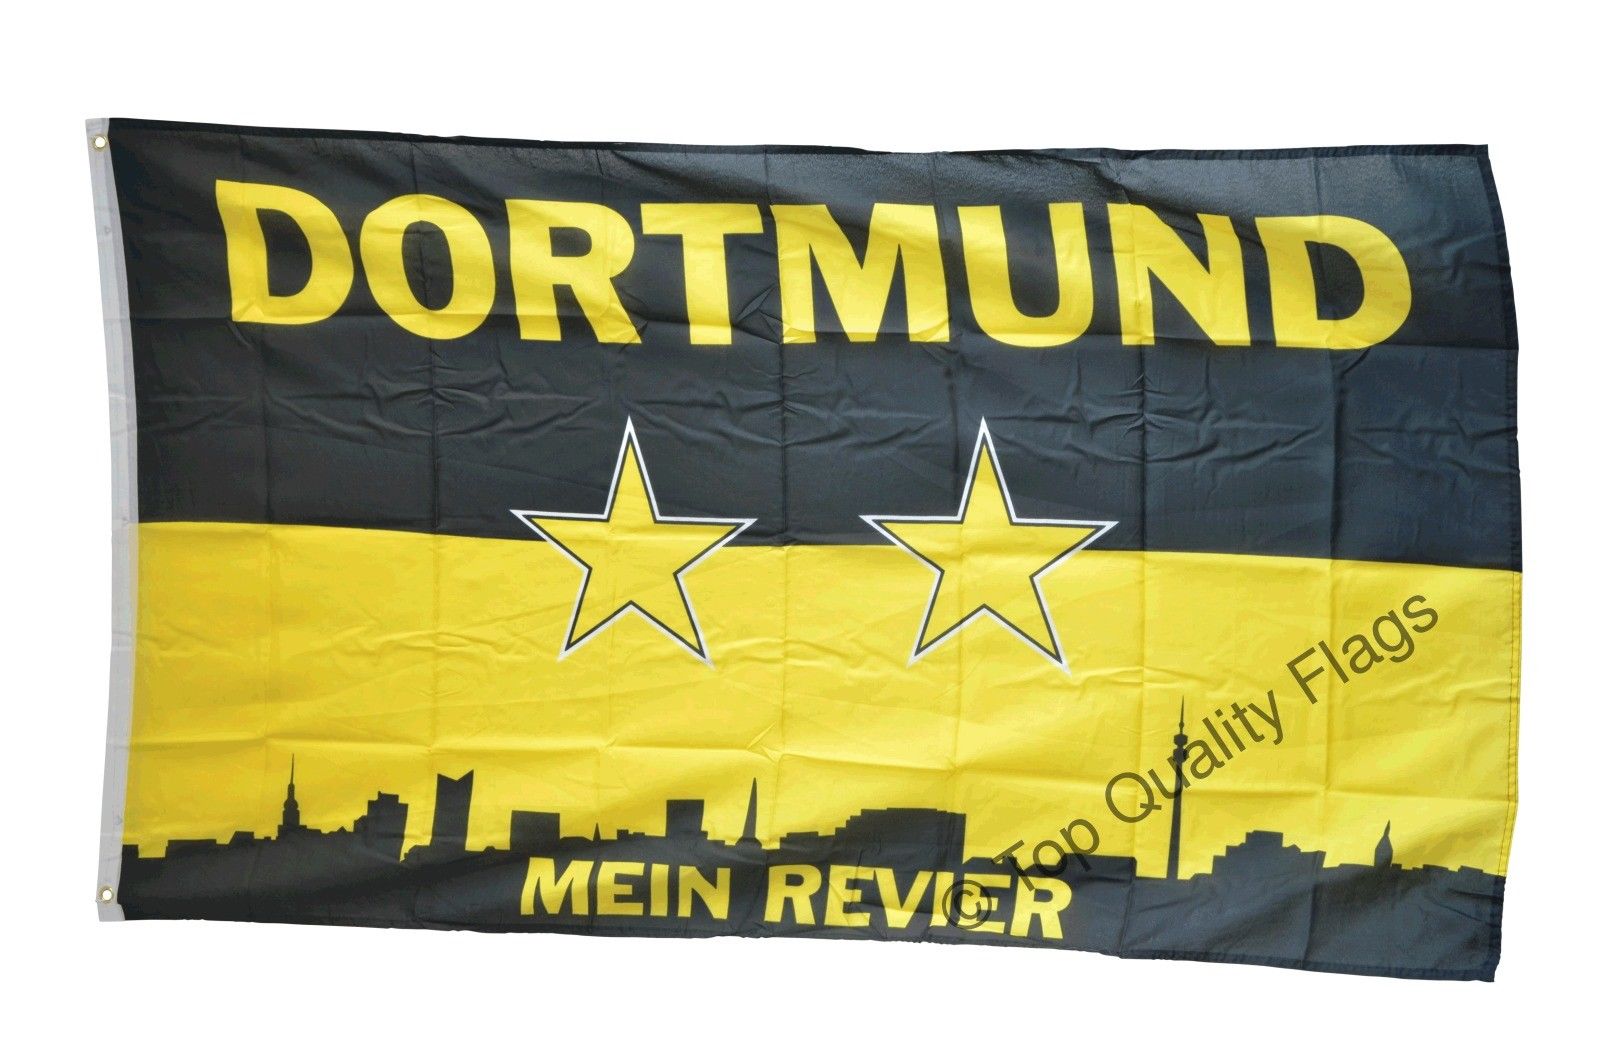 外贸货多特蒙德的标志Dortmund Mein Revier FLAG亚马逊WISH EBAY